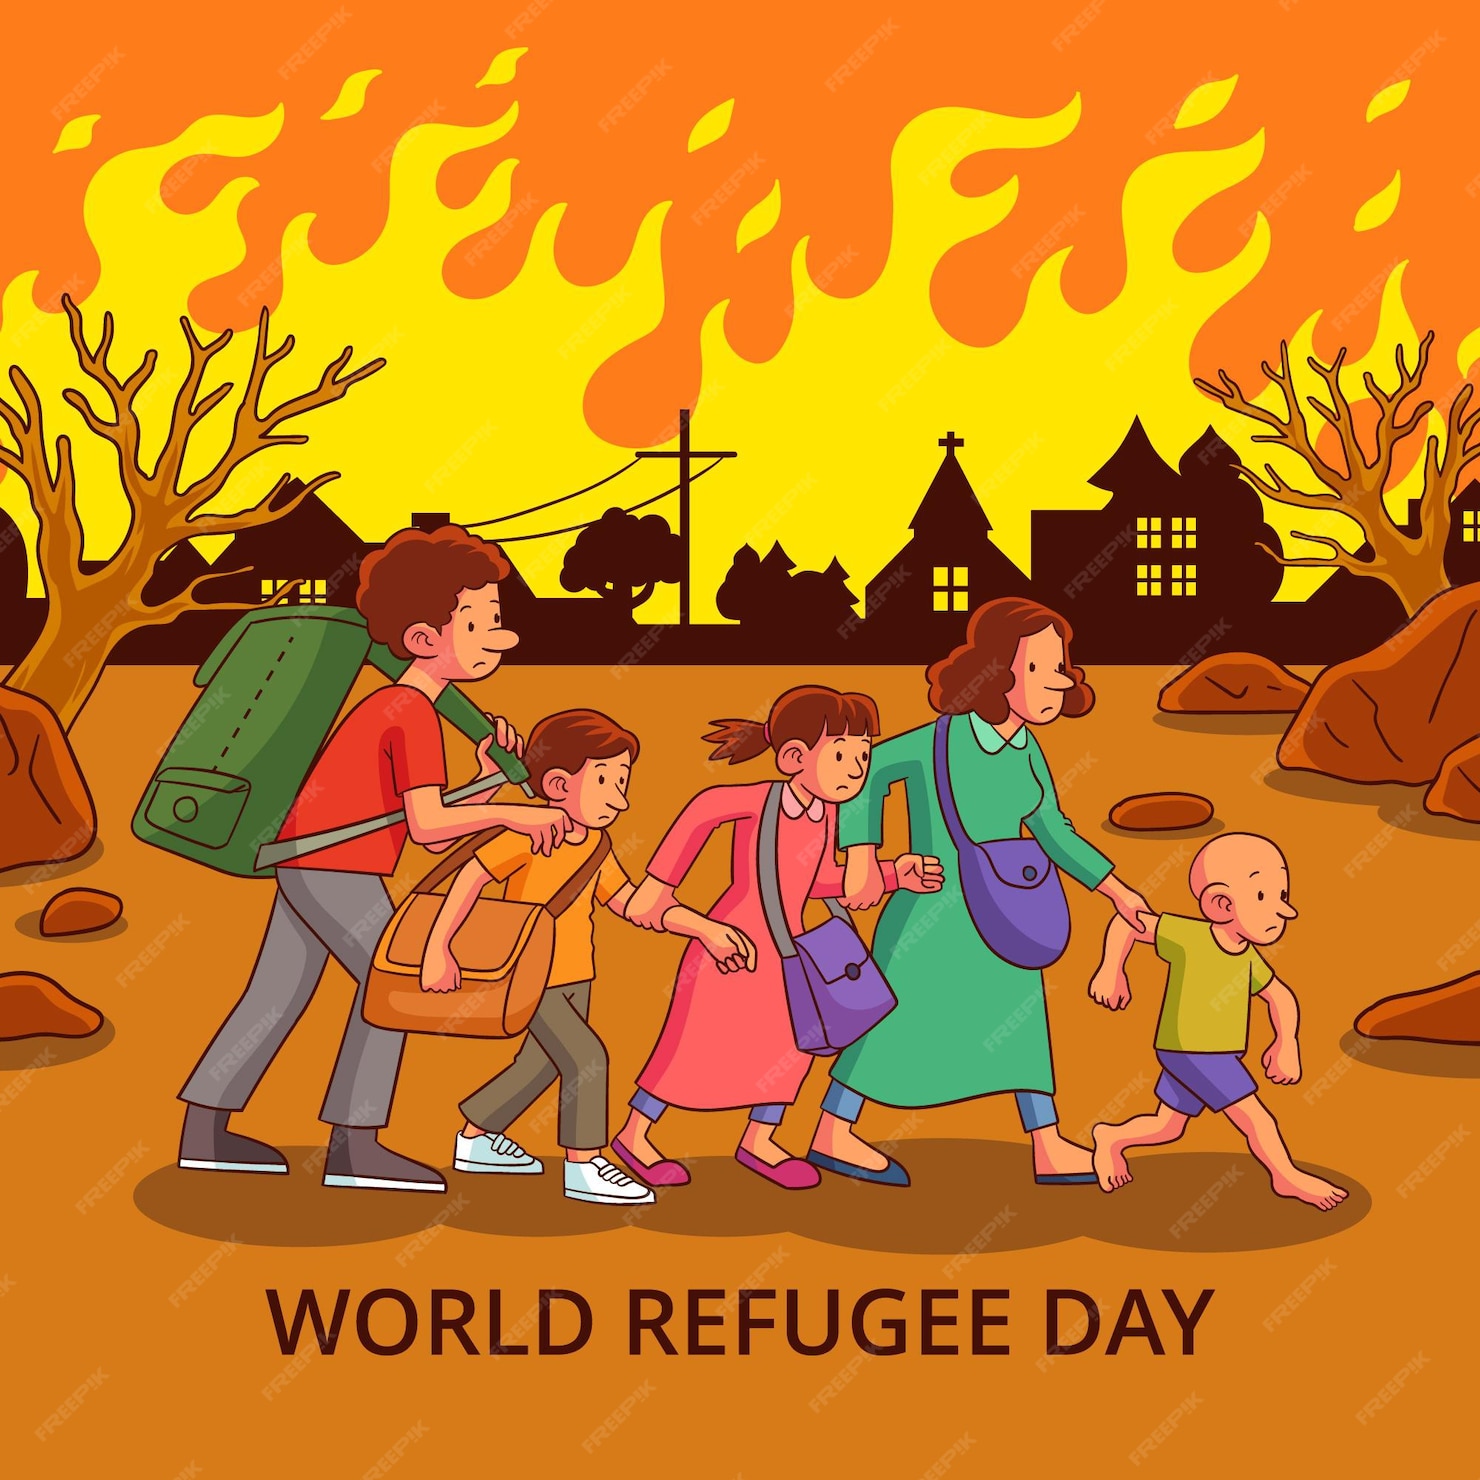 Free Vector Hand drawn world refugee day illustration